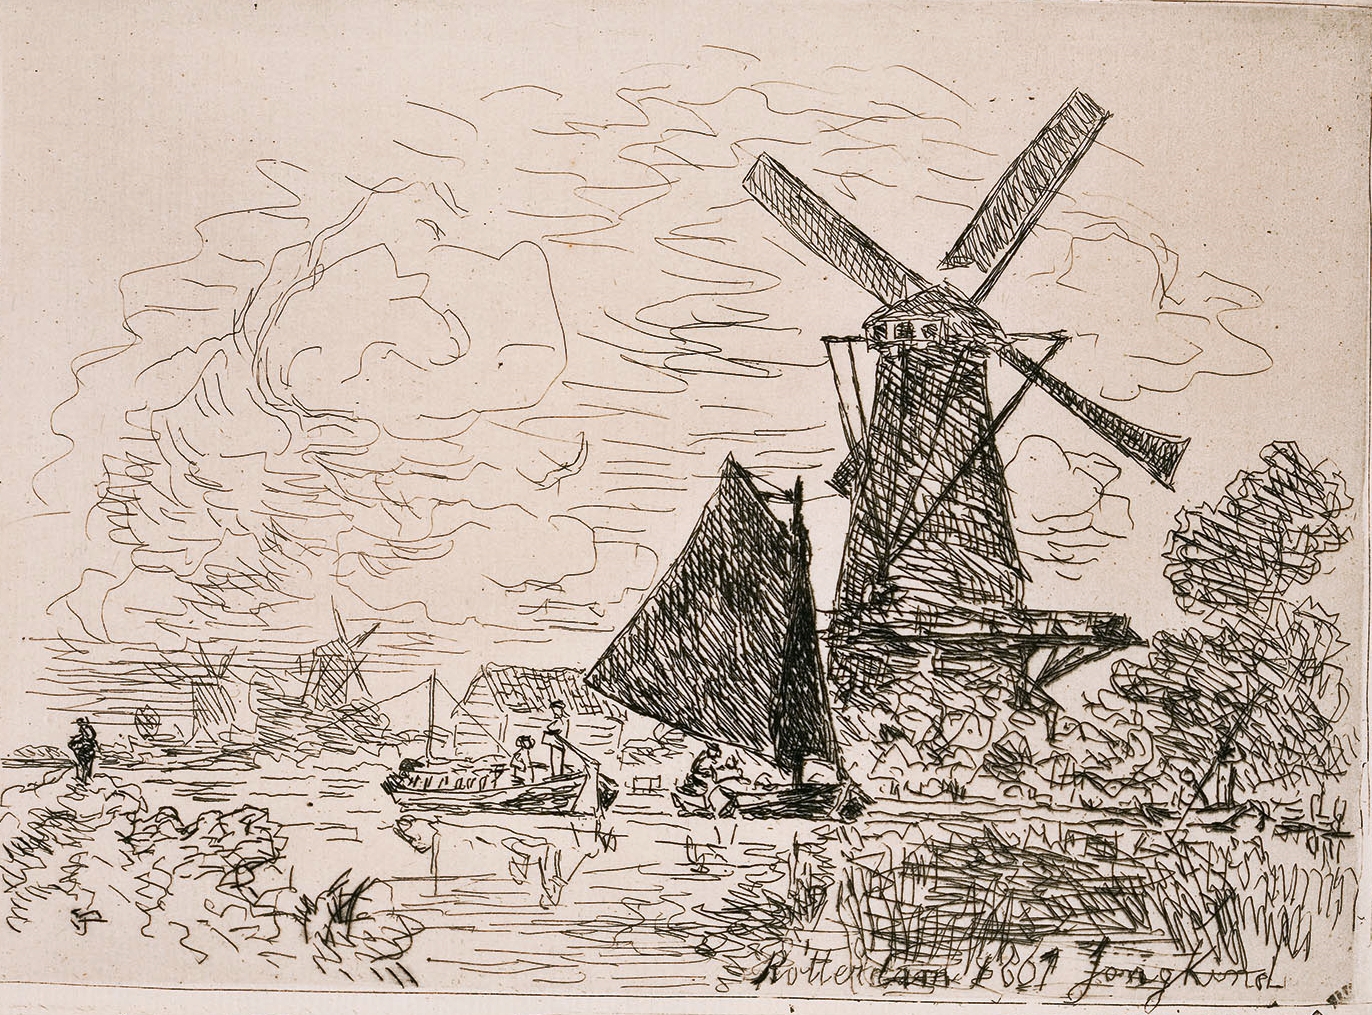 Johan+Barthold+Jongkind-1819-1891 (14).jpg